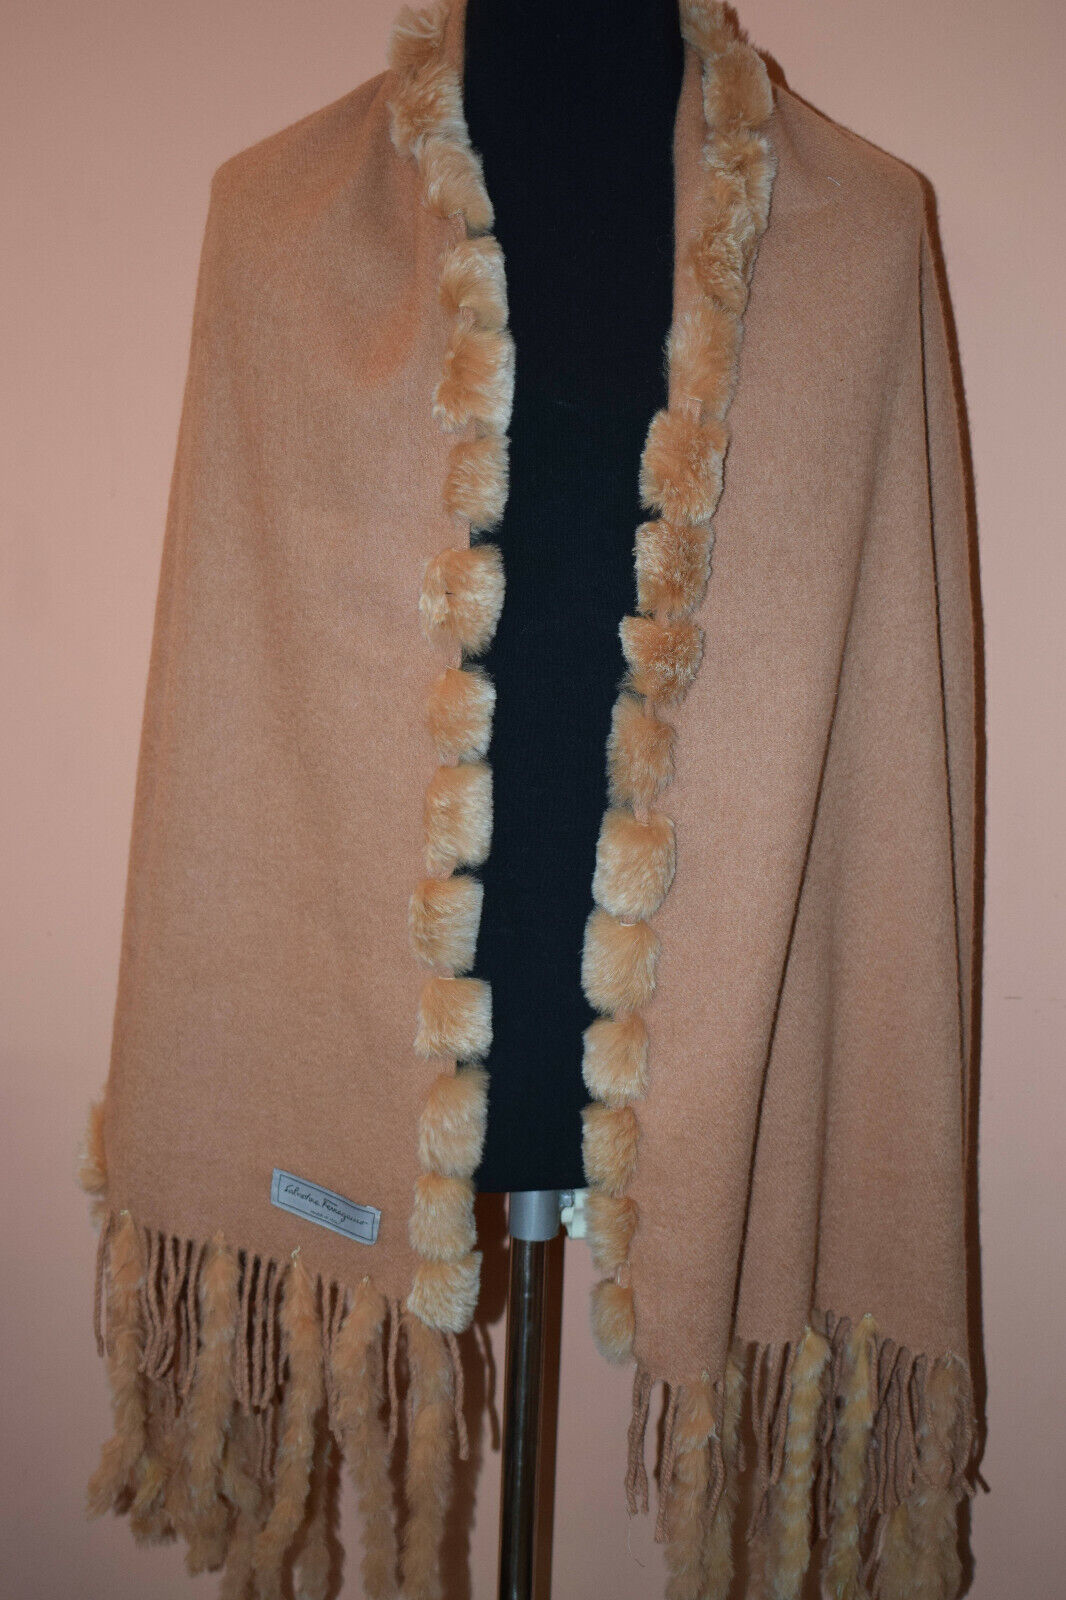 Salvatore Ferragamo Beige Camel Brown Fur Scarf SHAWL color in Good Condition 